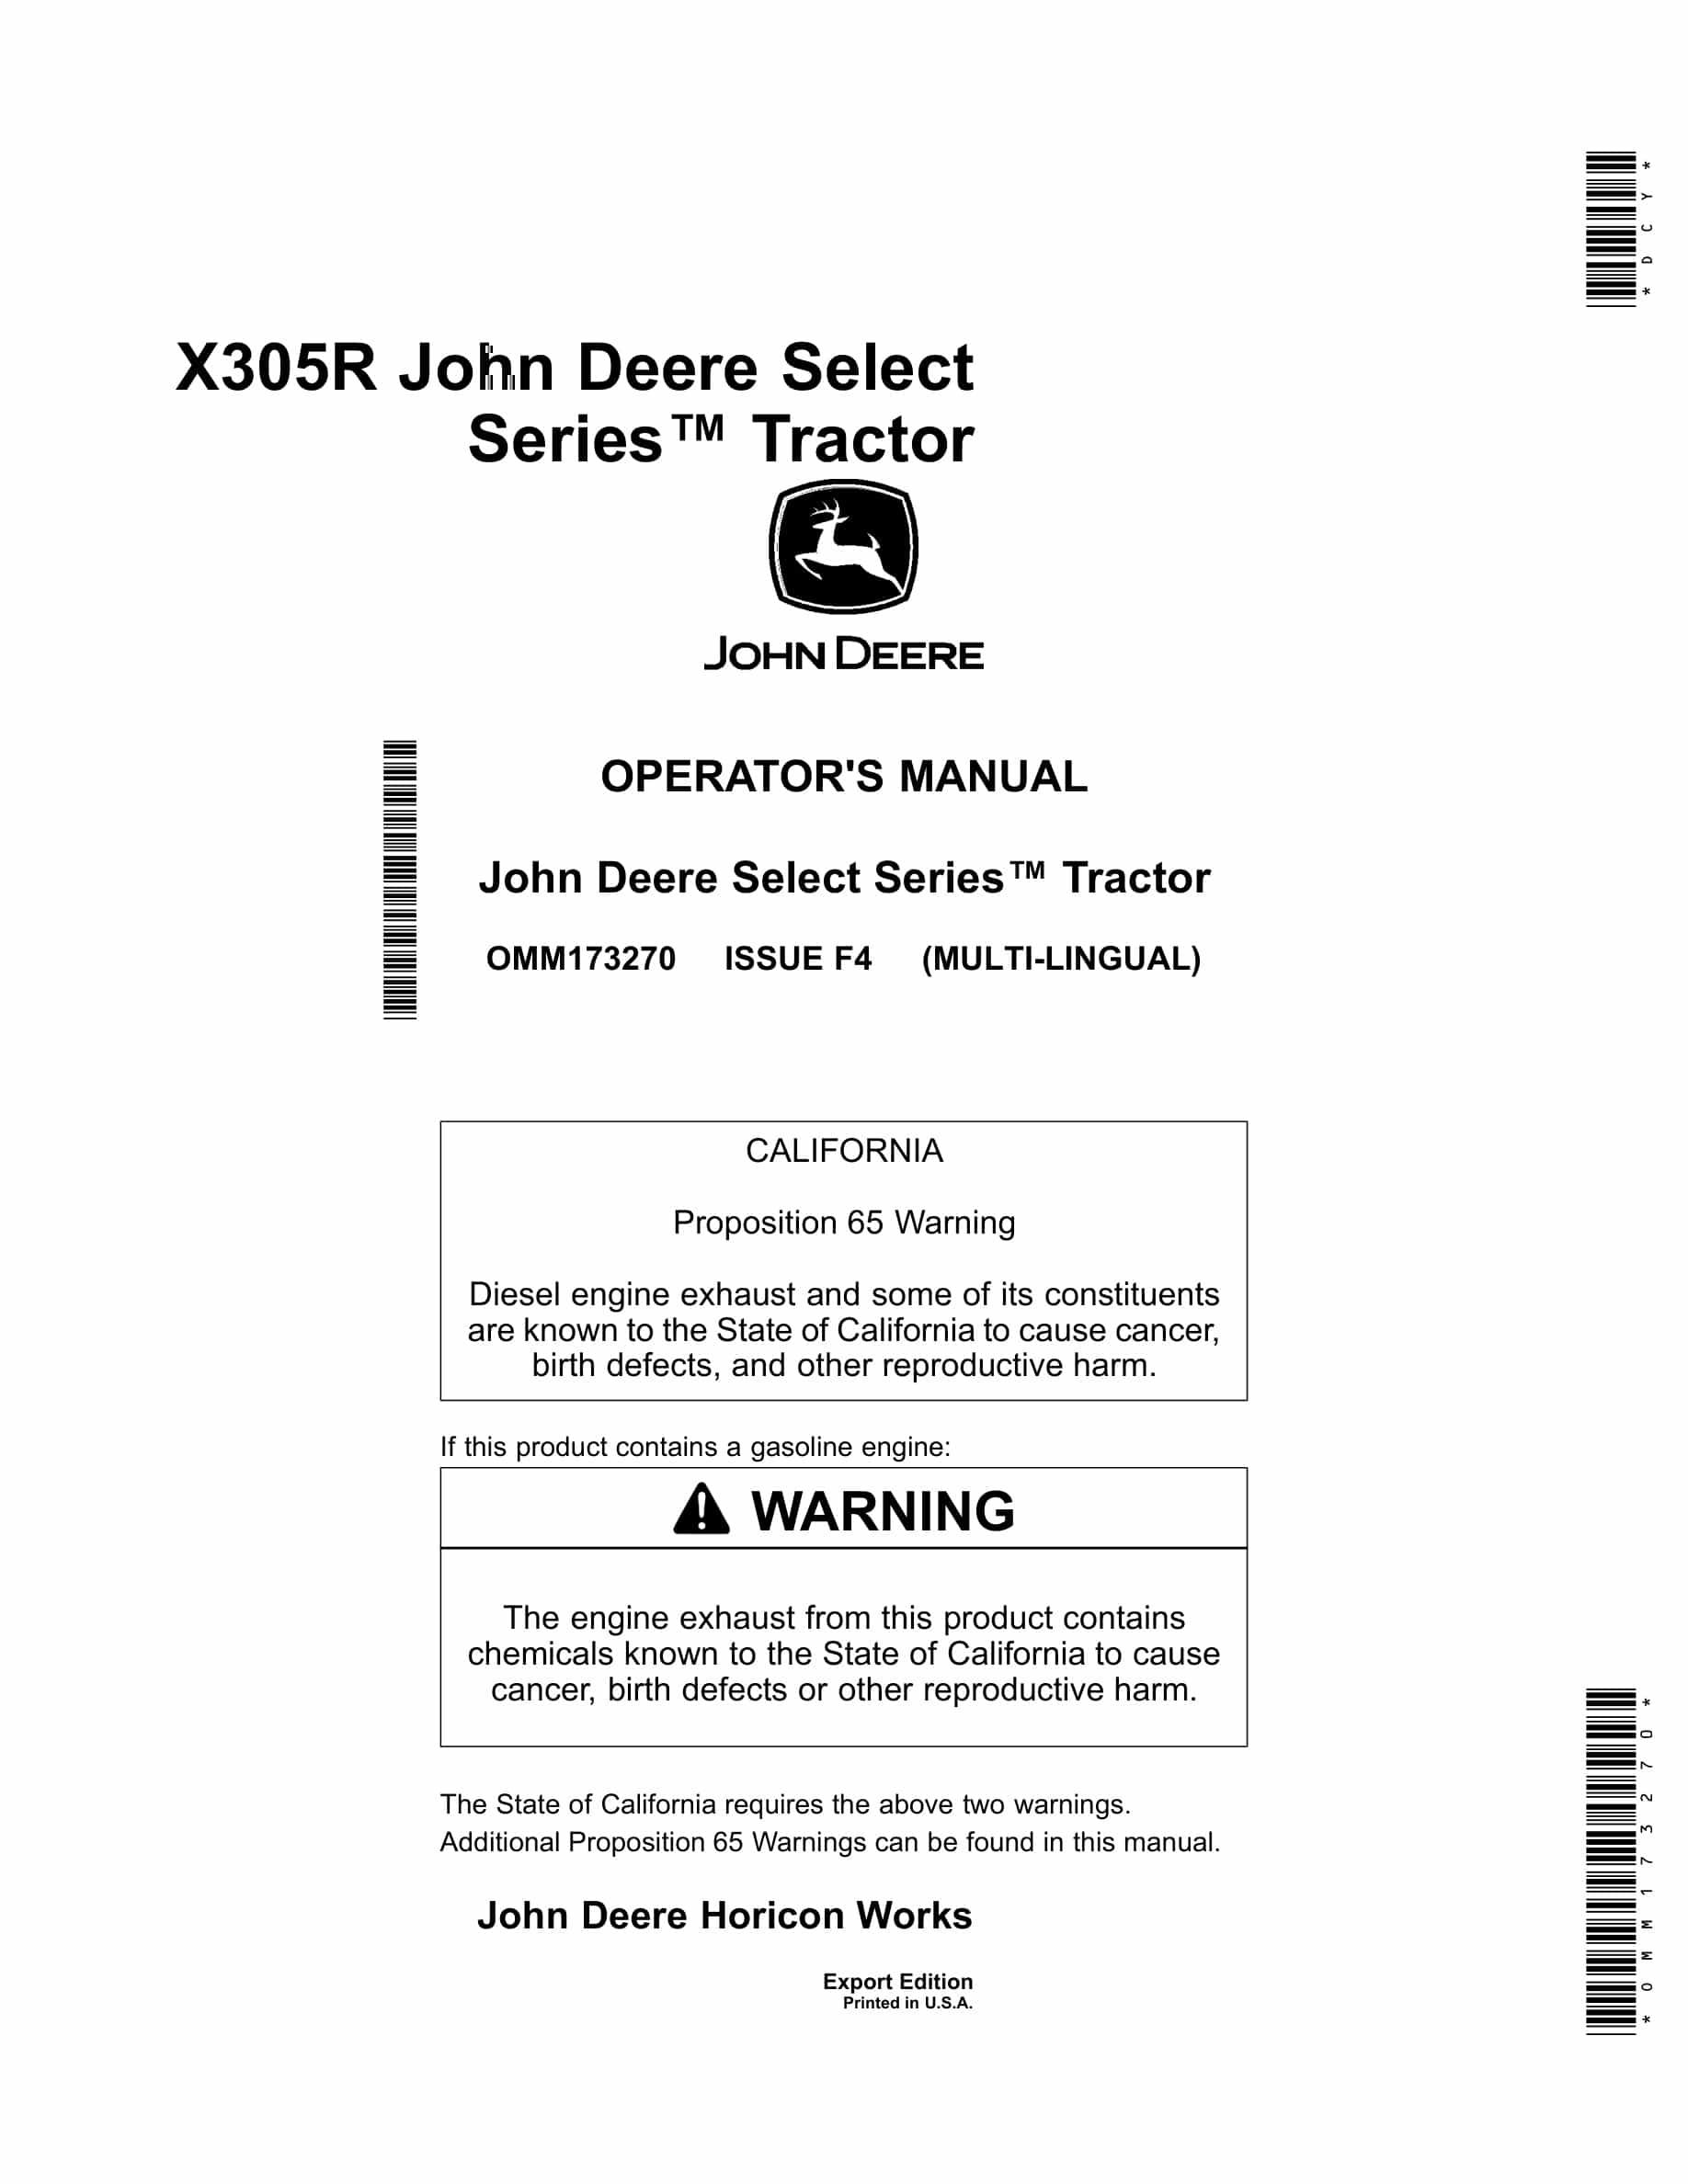 John Deere X305r Tractors Operator Manuals OMM173270-1